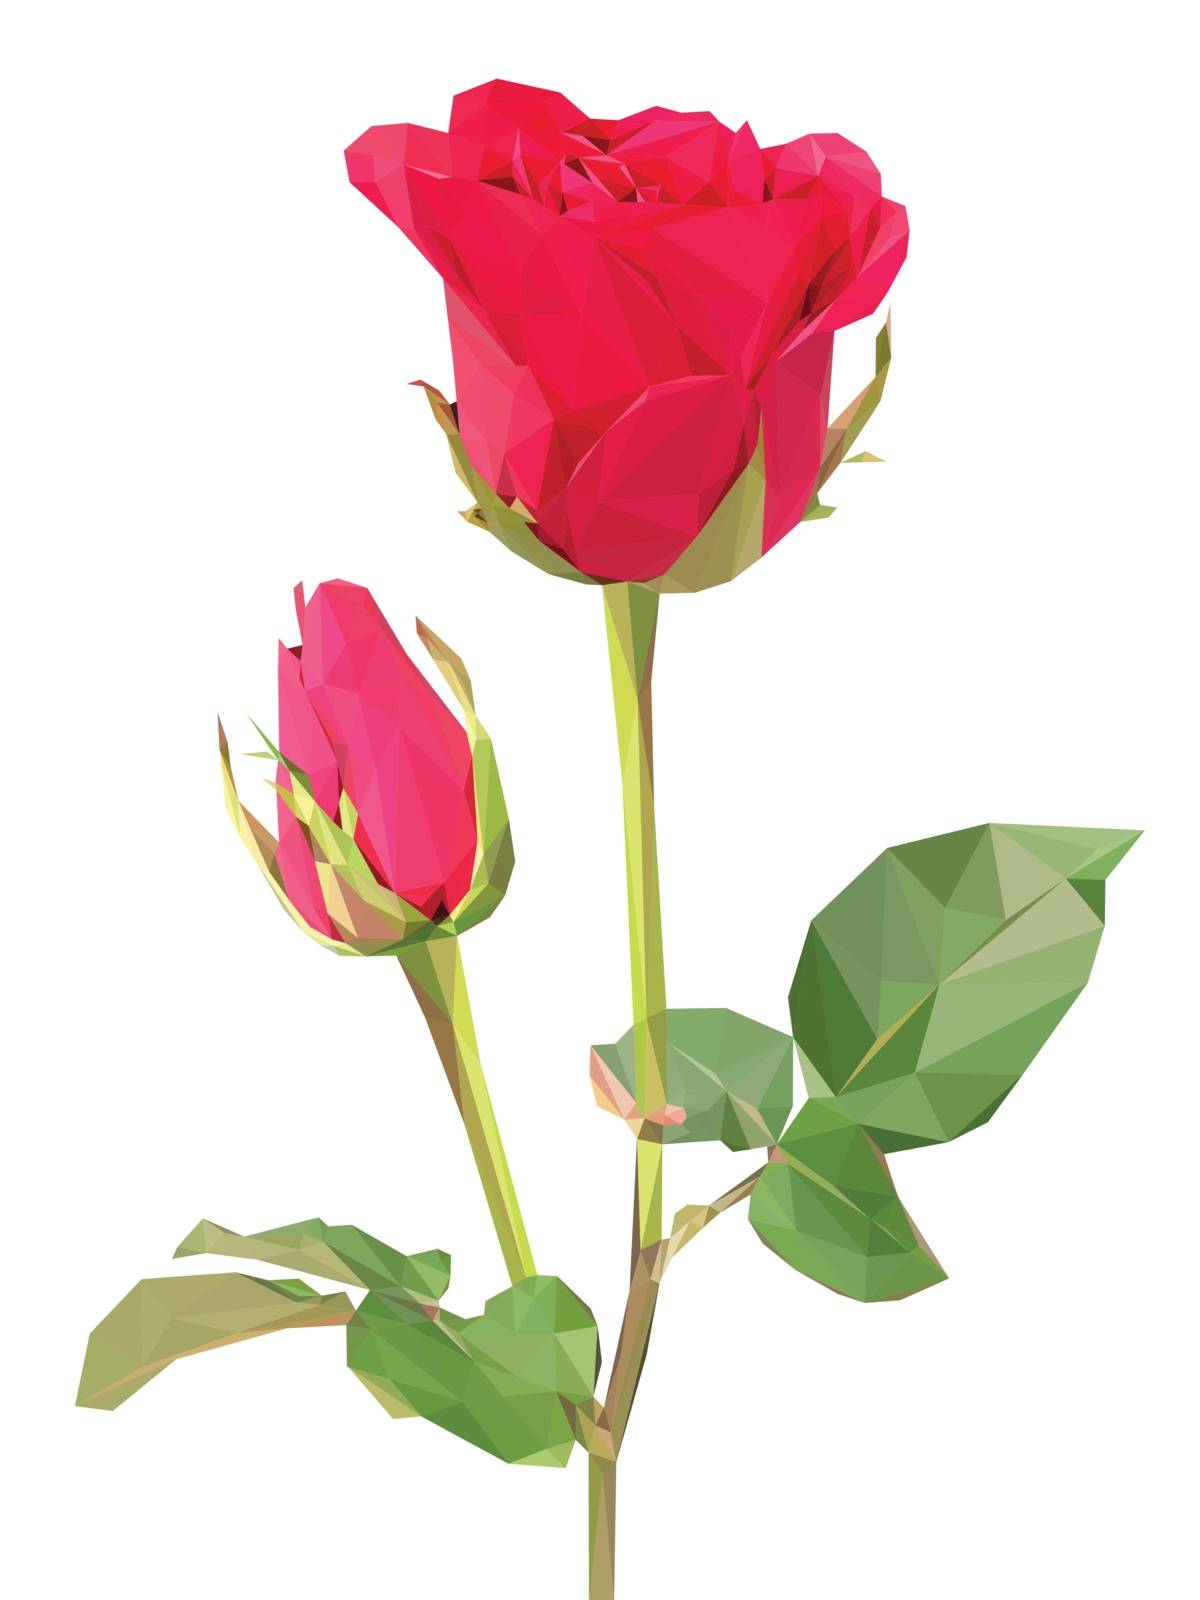 Red polygon rose